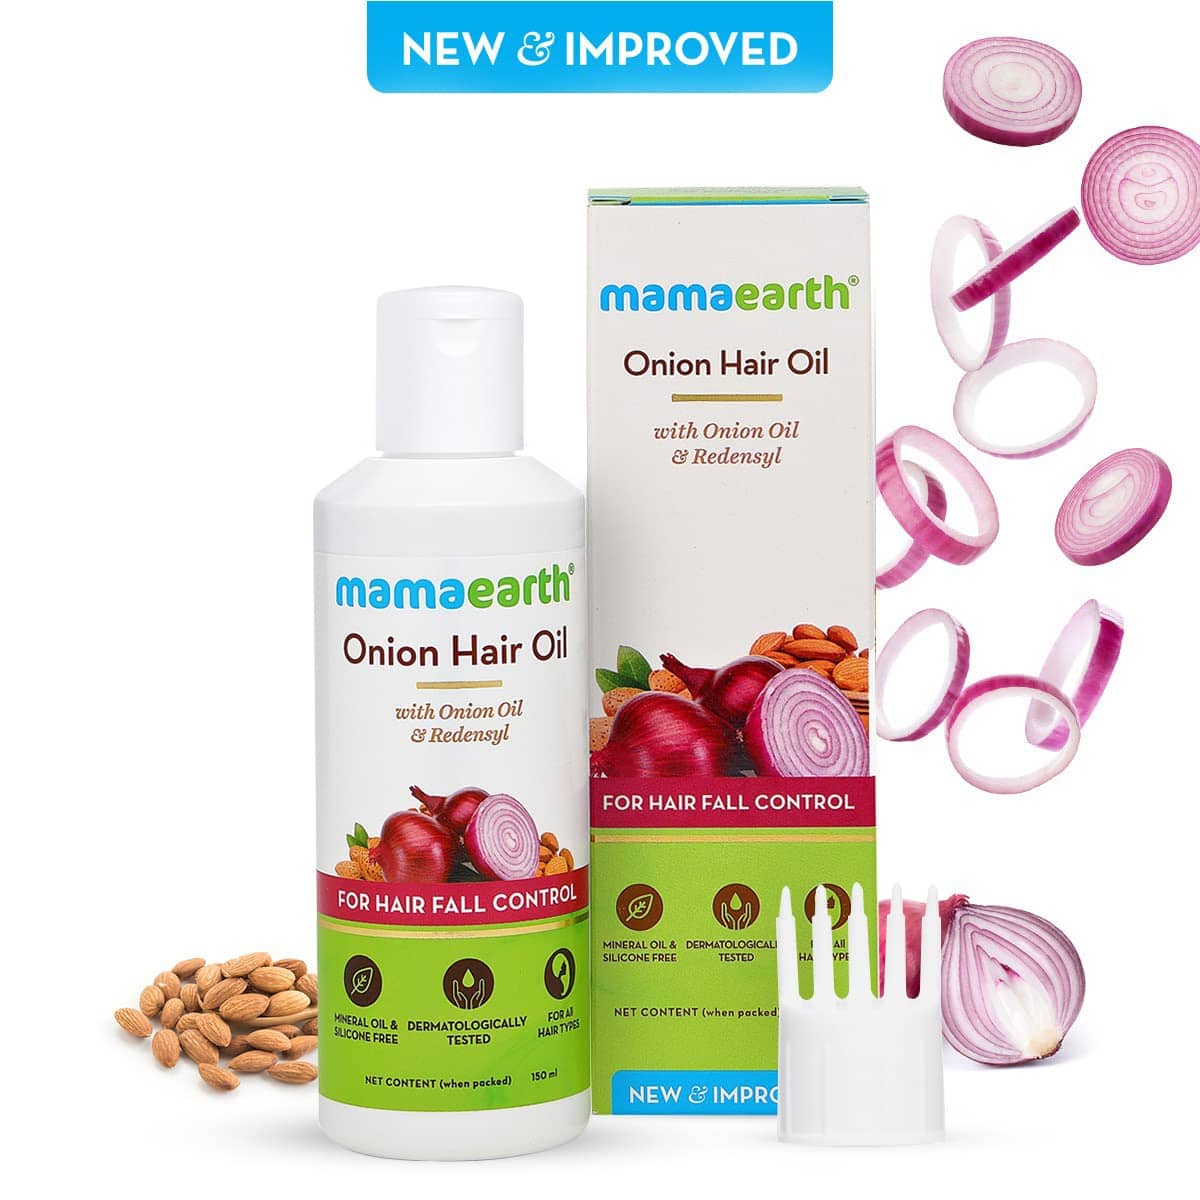 Mamaearth Onion Hair Oil for hair growth and Hair Fall Control